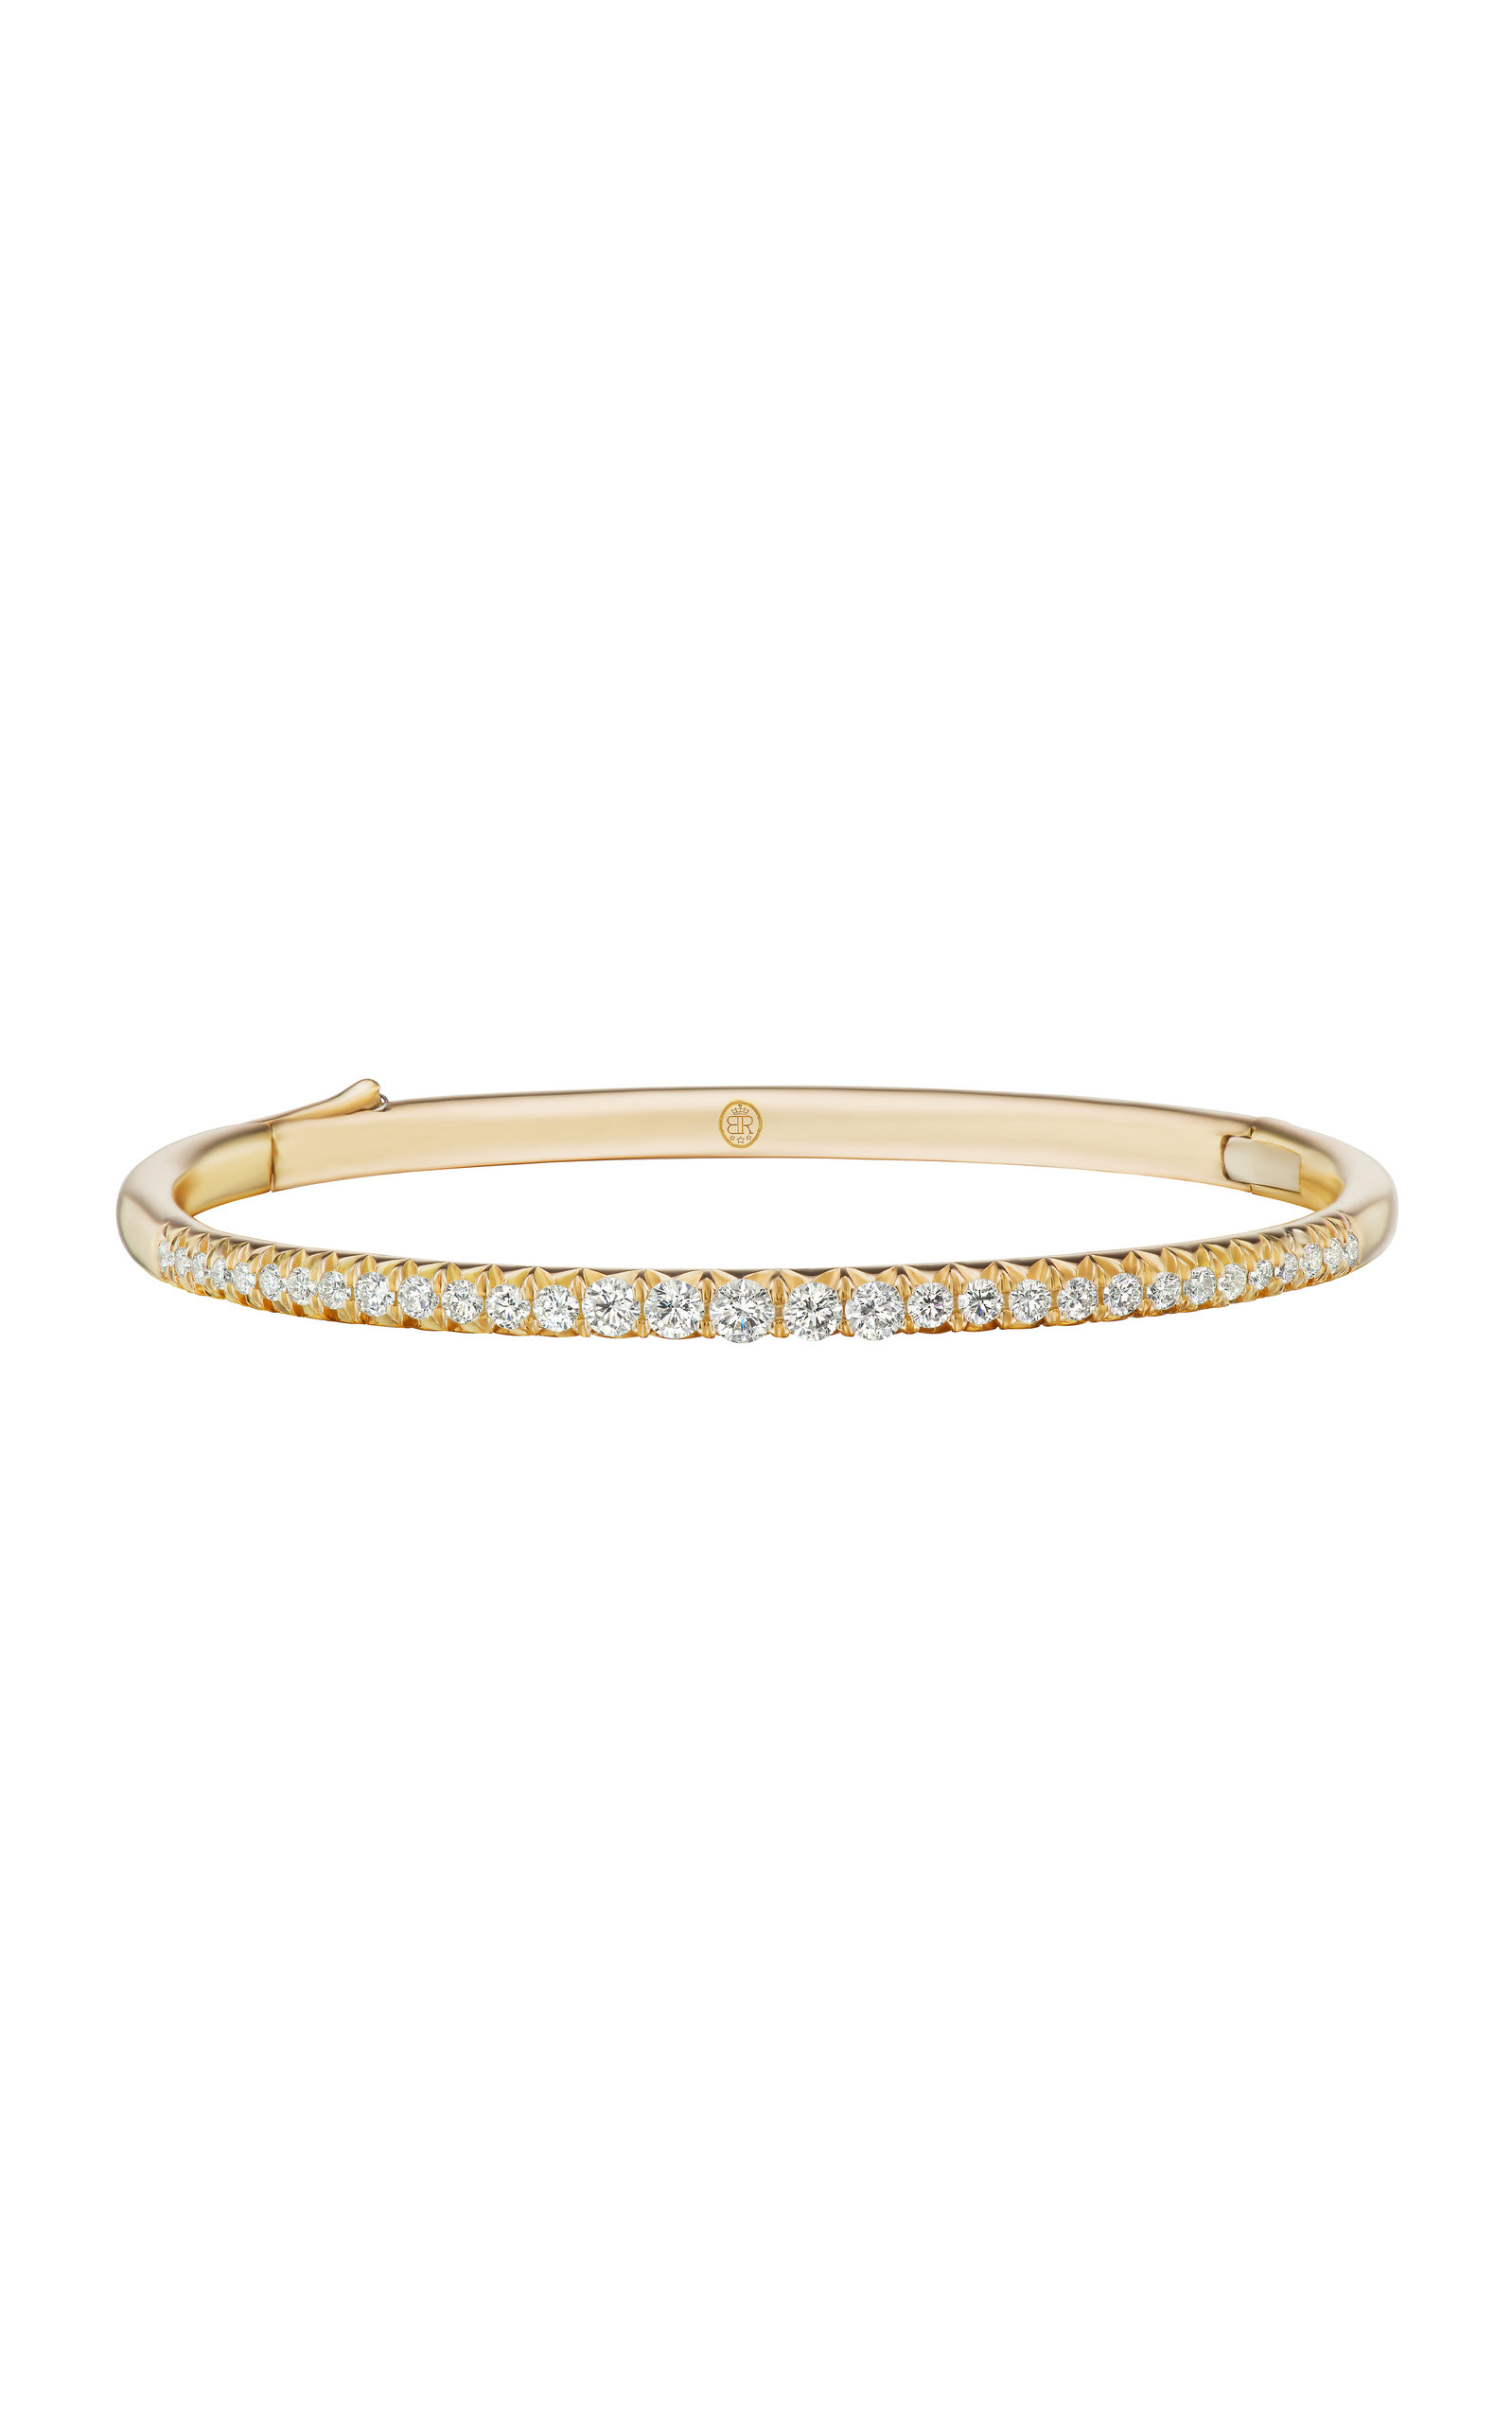 Briony Raymond Women's Étoile 18K Yellow Gold Diamond Bracelet